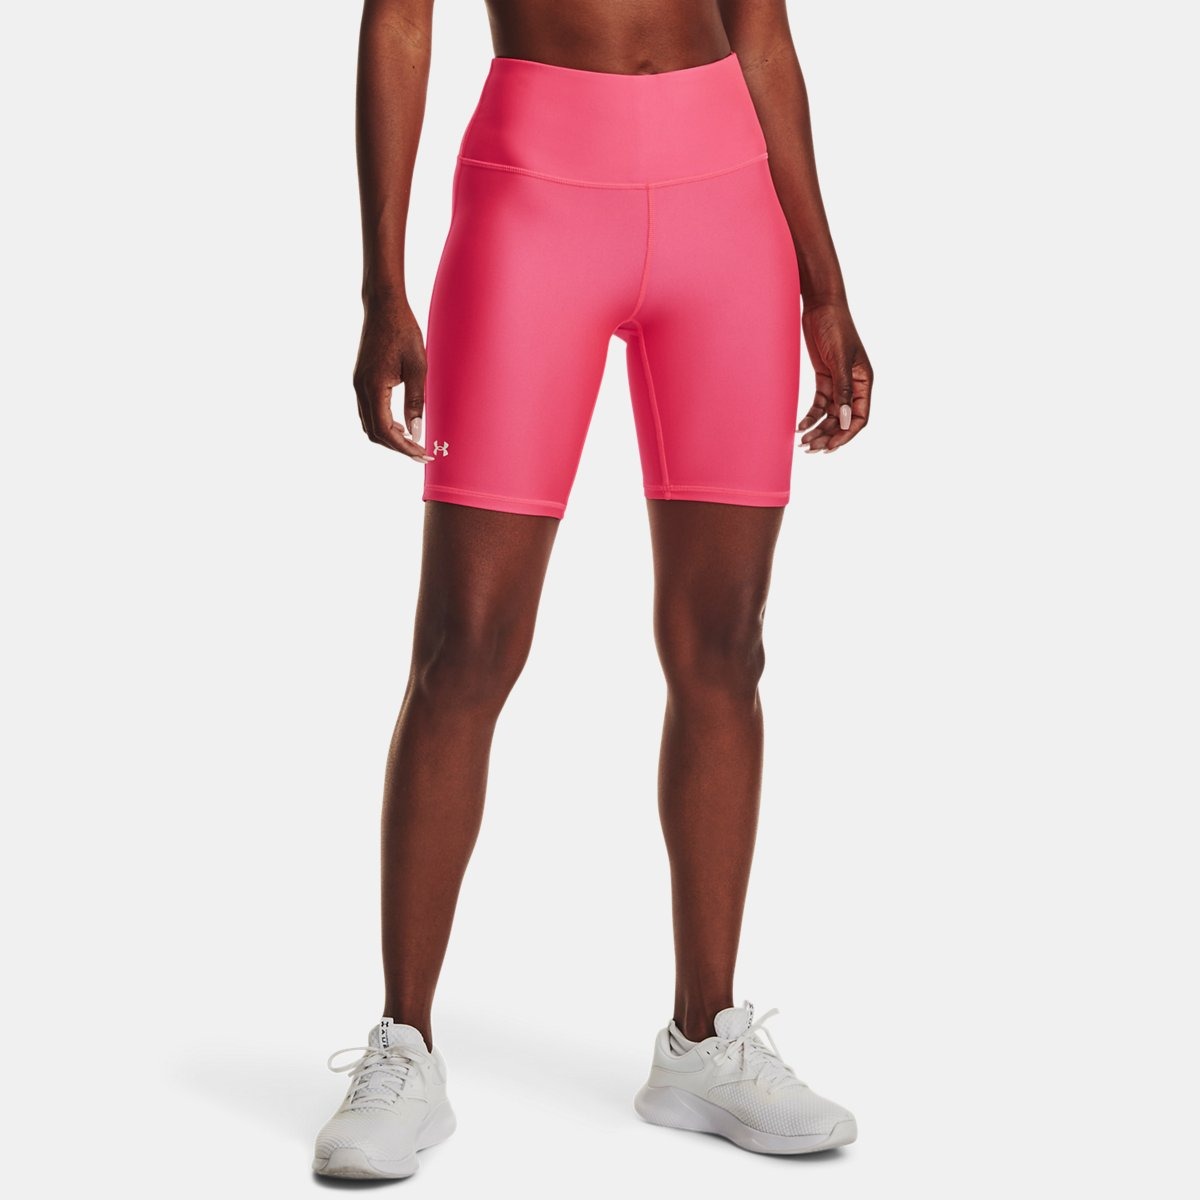 Under Armour - Shorts - Pink - Woman GOOFASH